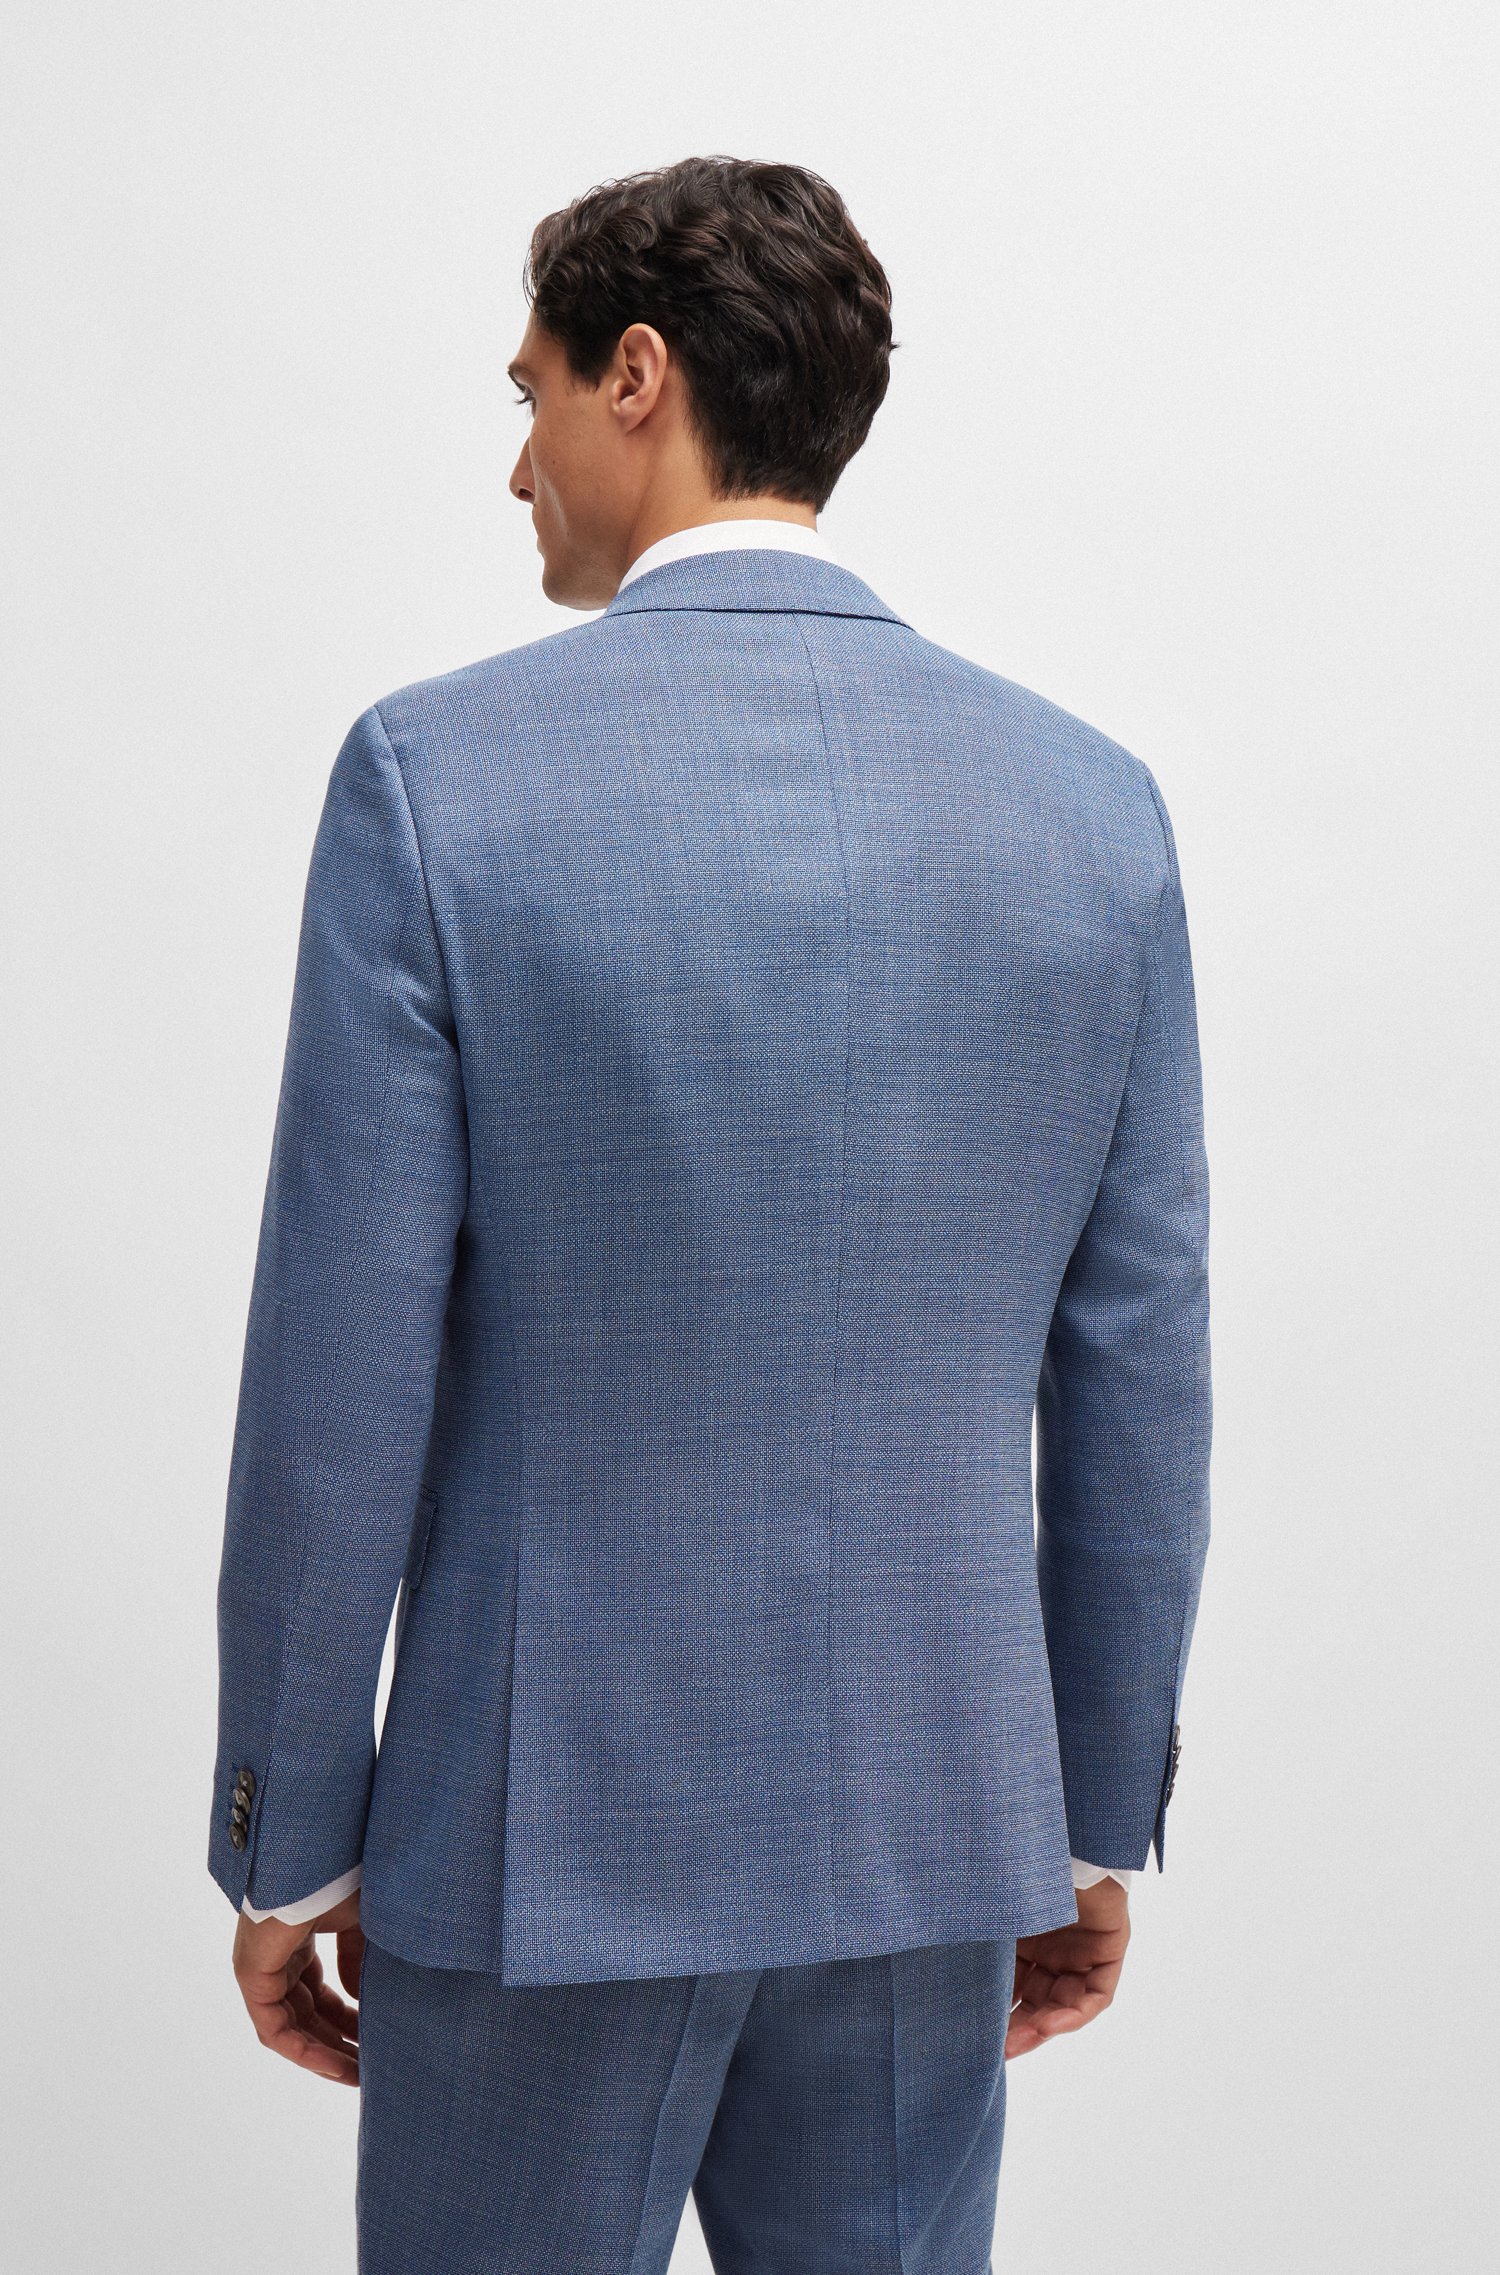 Slim-fit suit a hopsack-weave wool blend